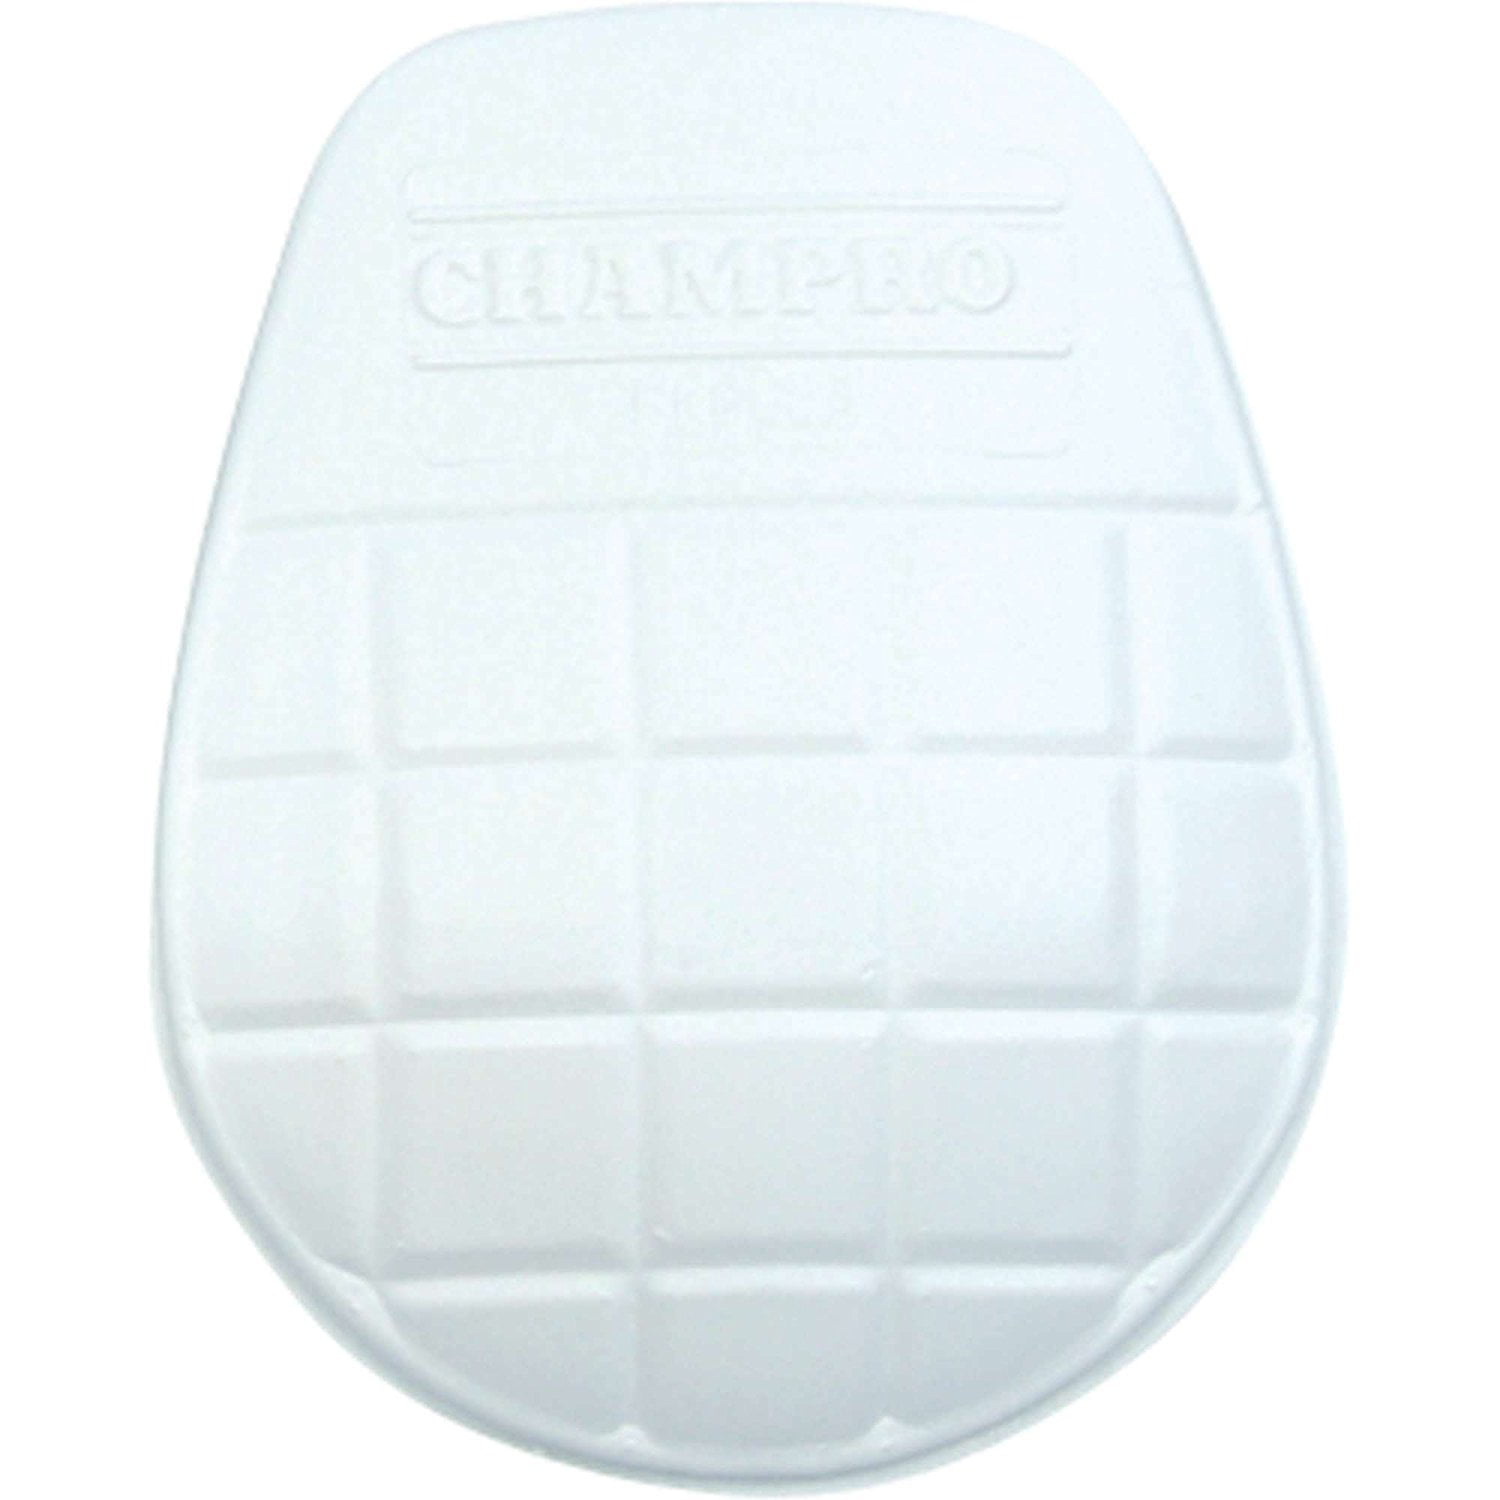 Champro Adult Ultra Light Knee Pads 